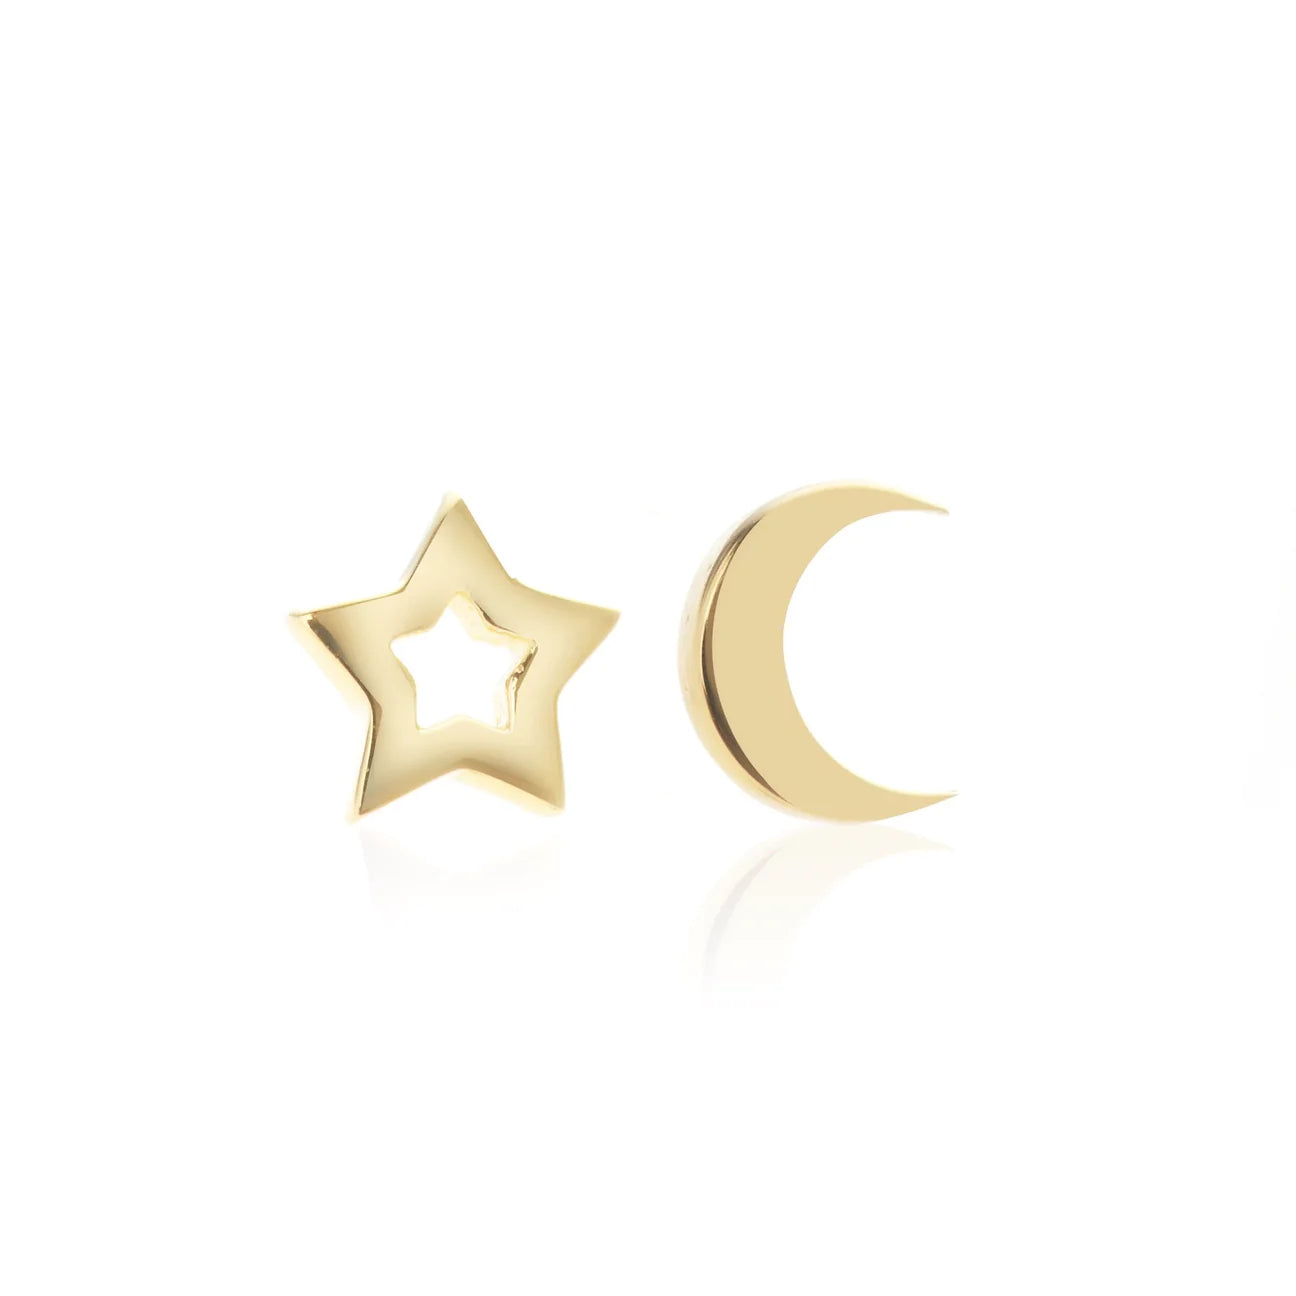 Superfine Earrings - Starry Night Gold Plate